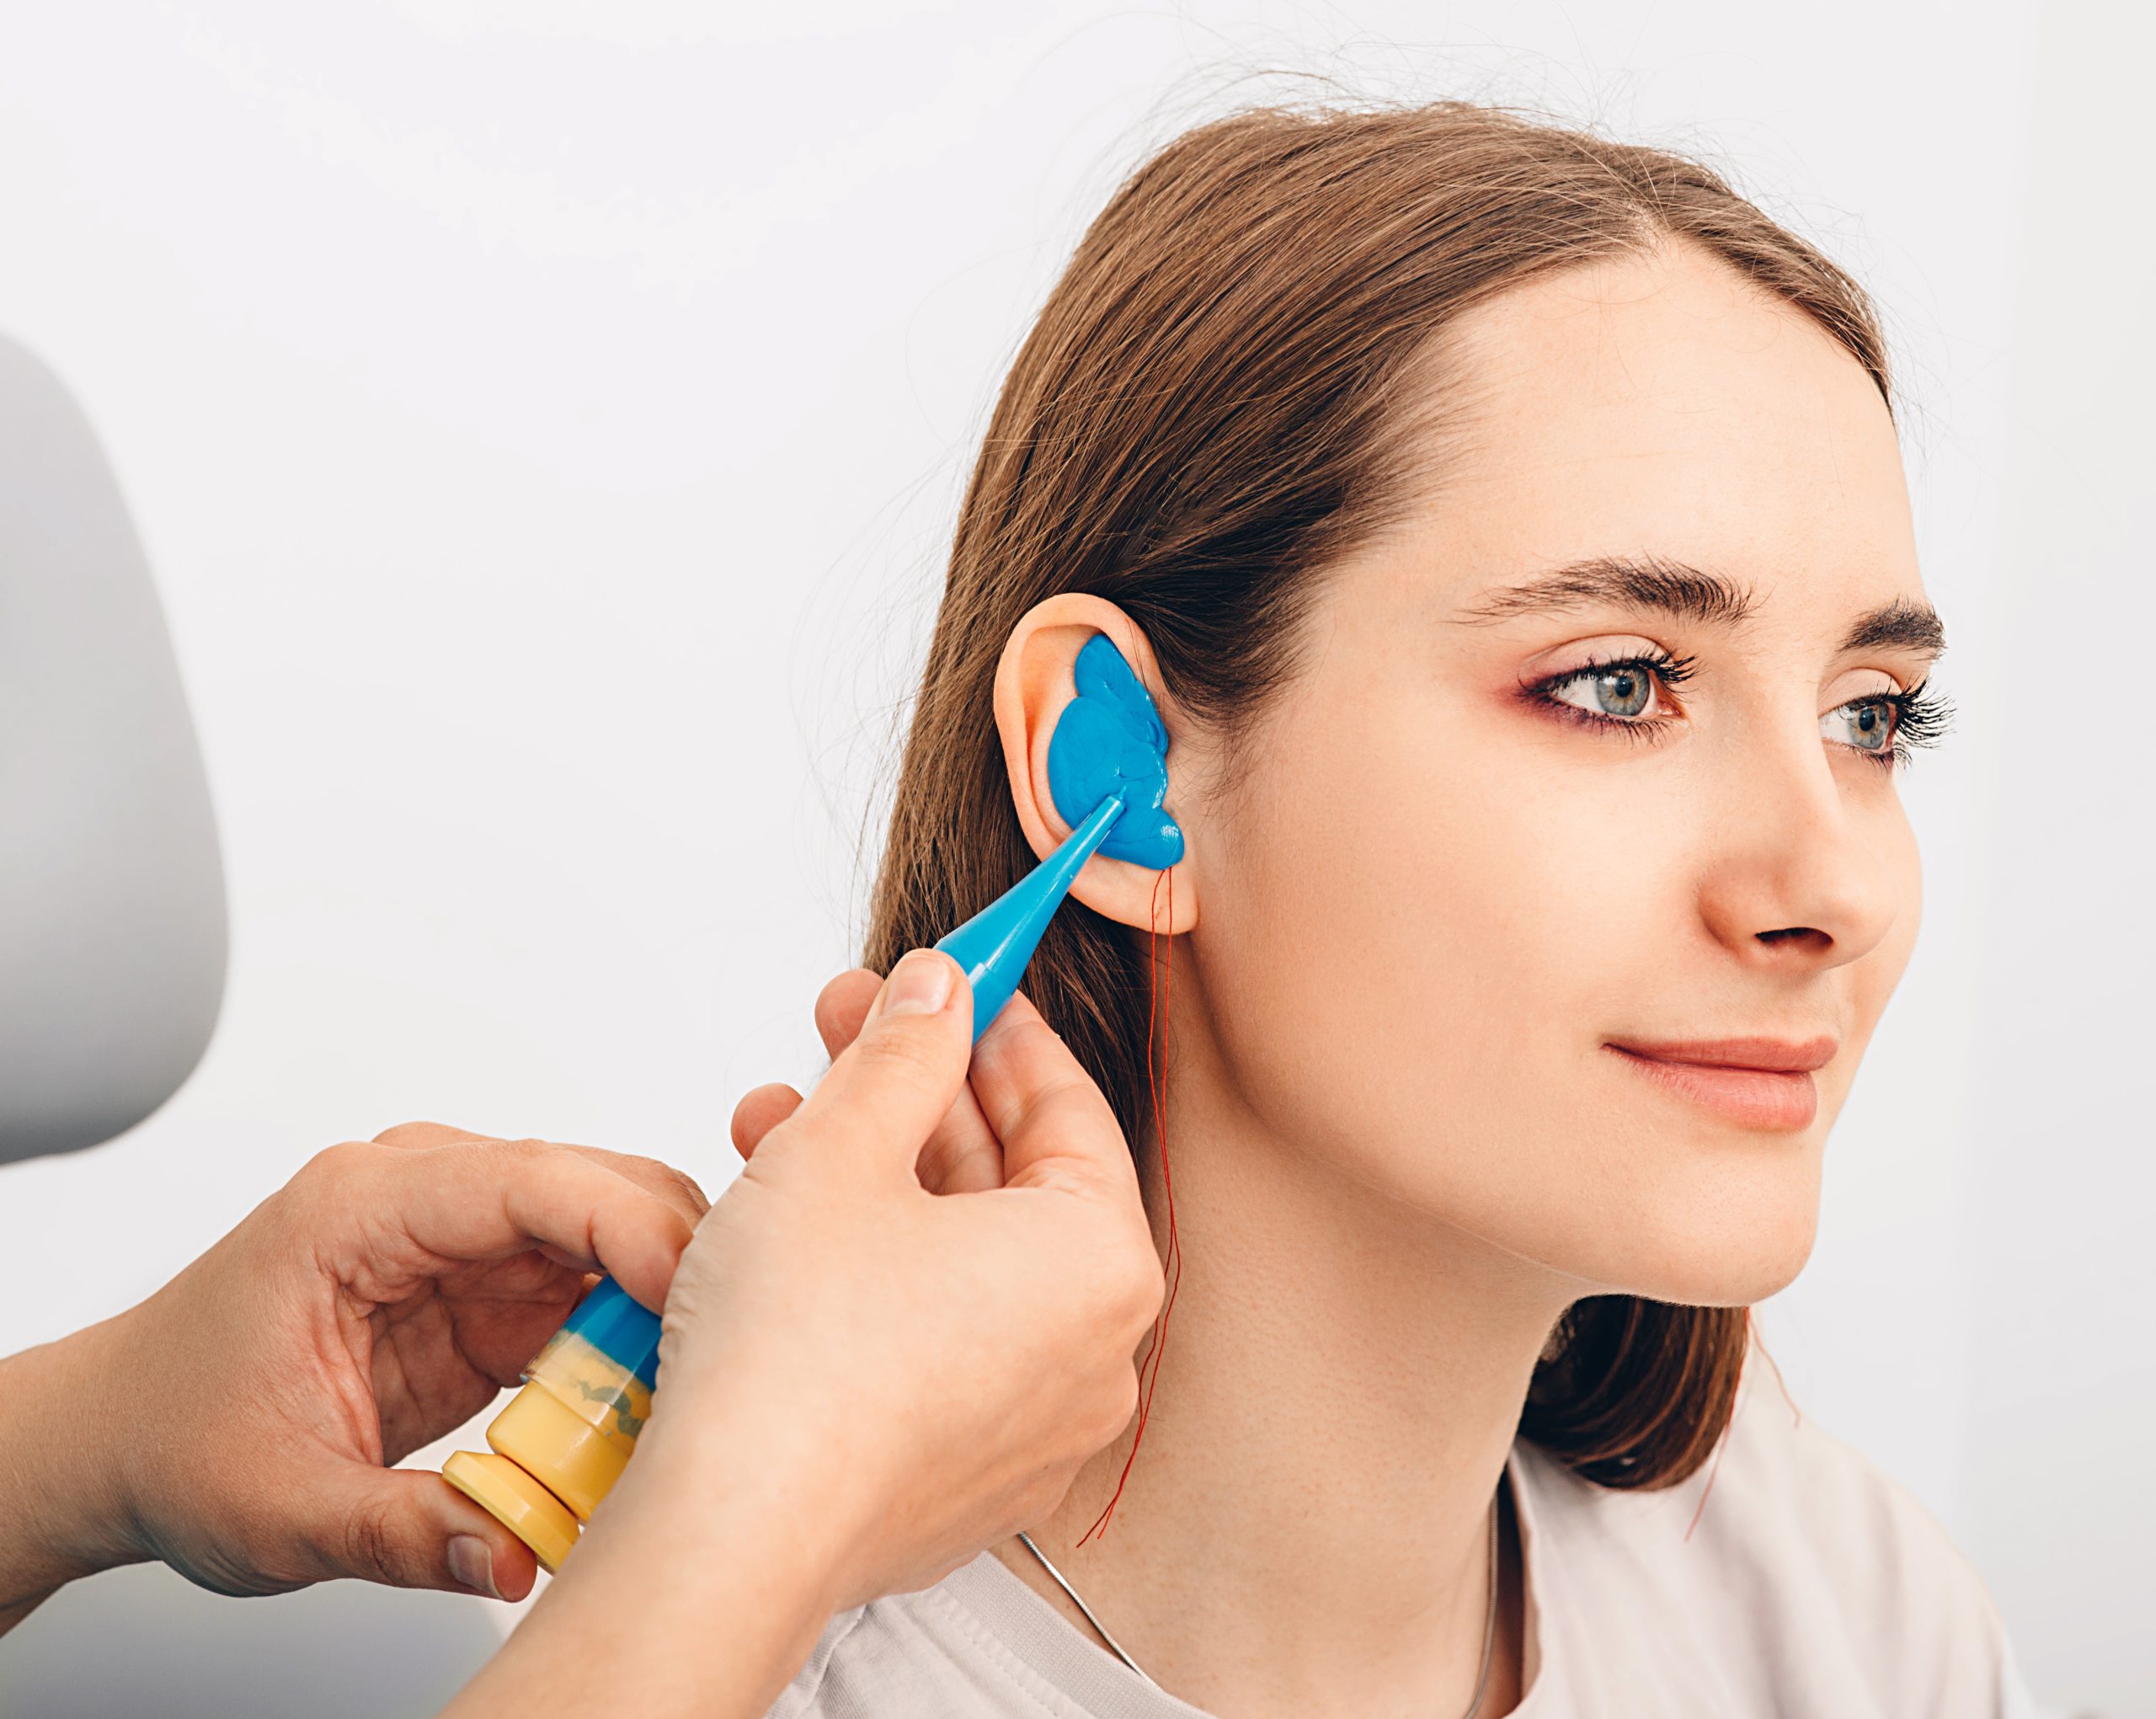 Can you get custom ear plugs made?